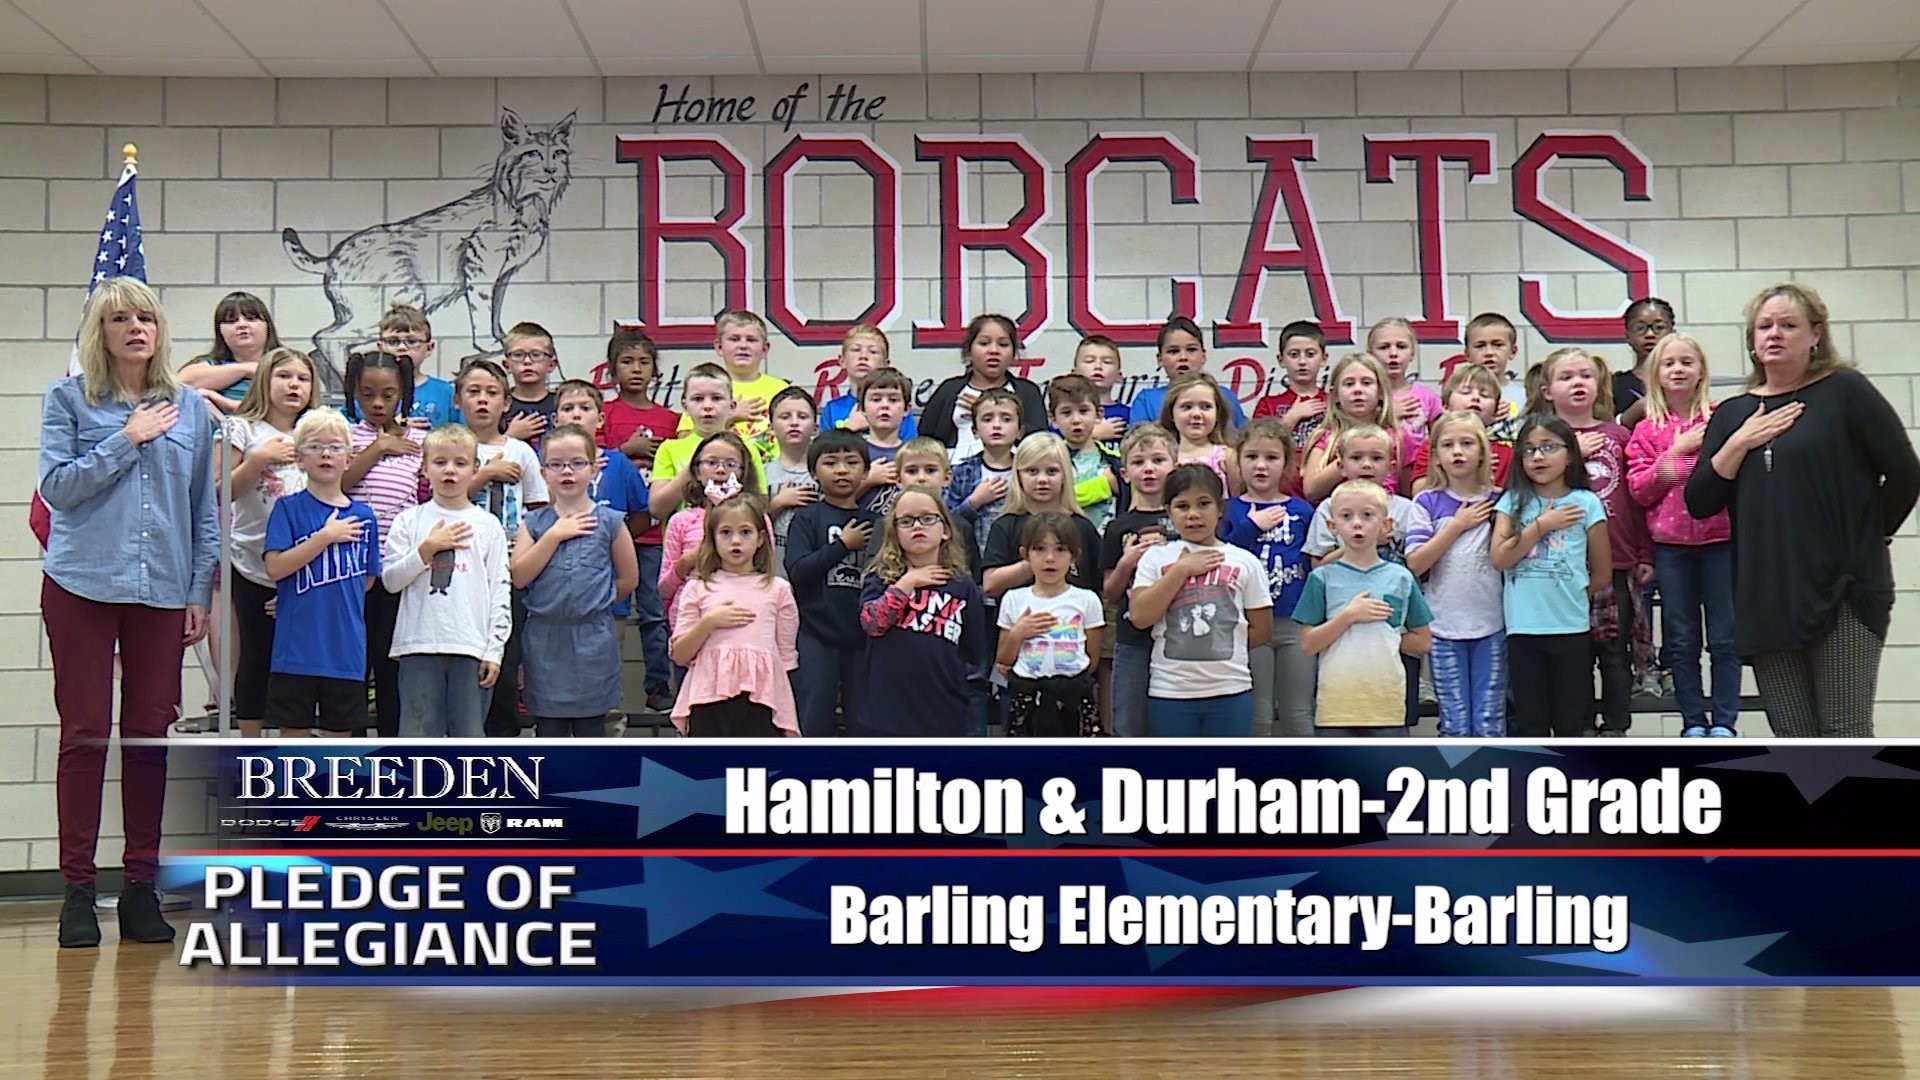 Hamilton & Durham  2nd Grade Barling Elementary, Barling